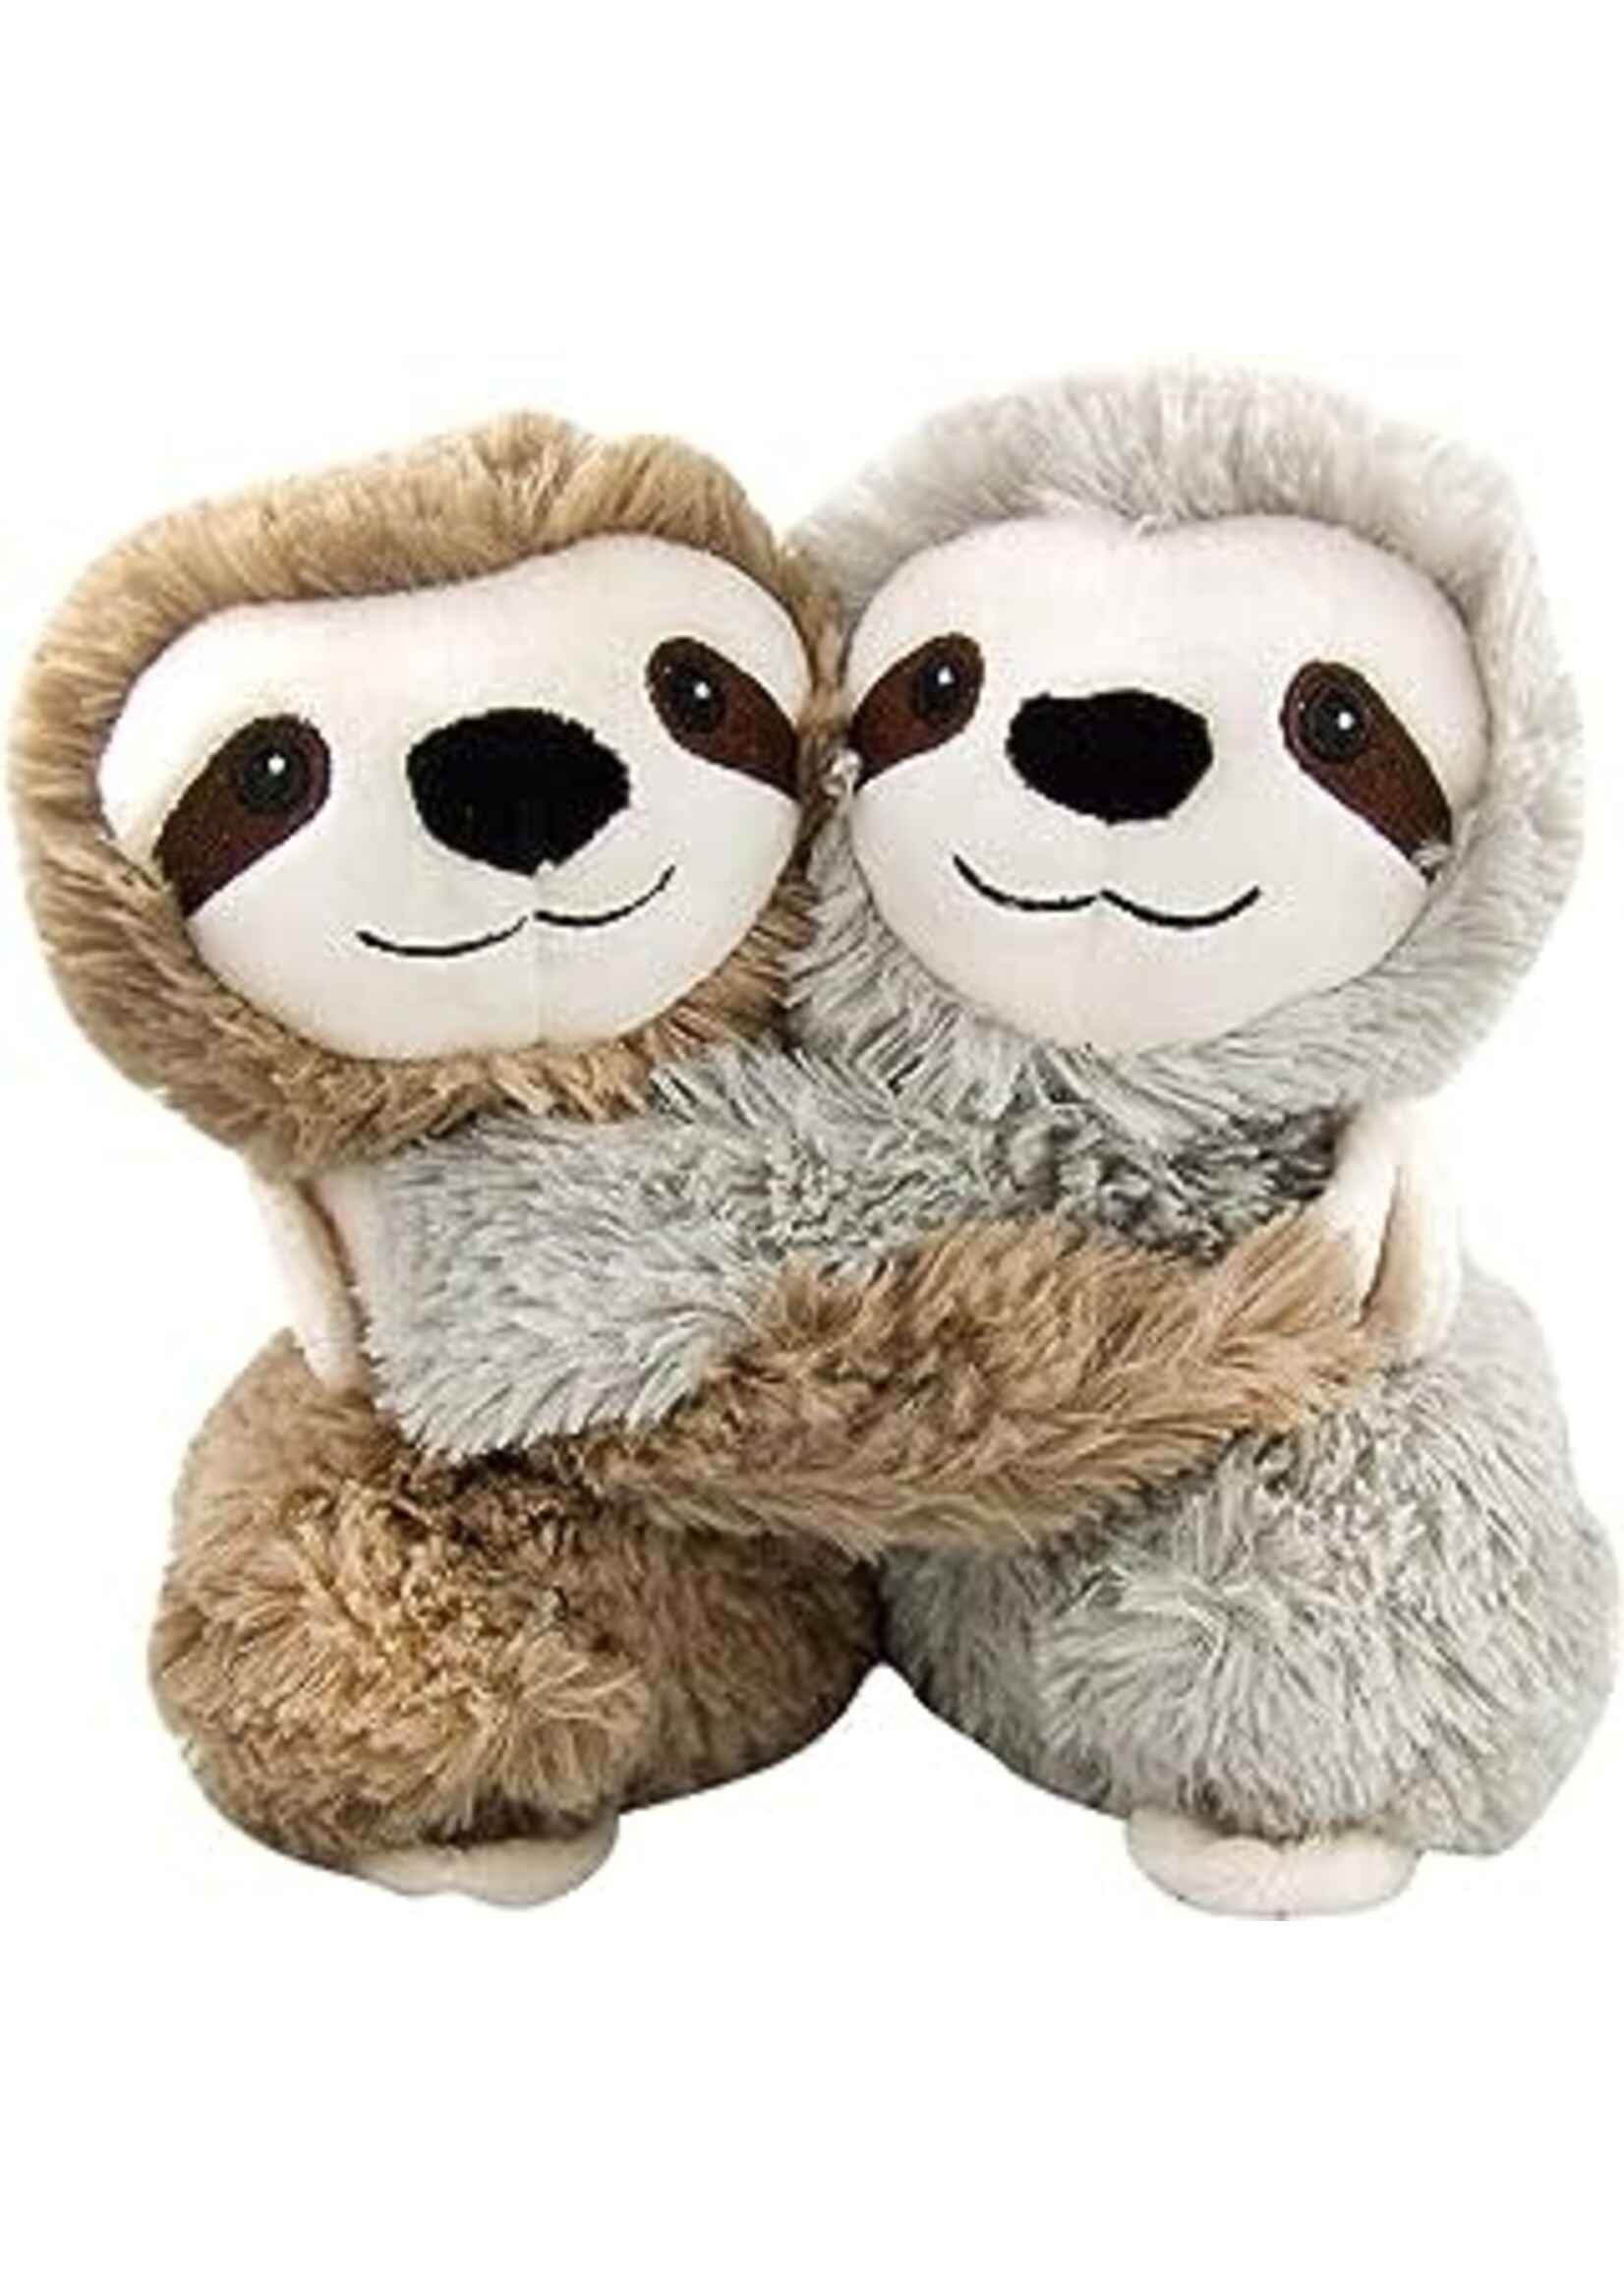 Warmies: Sloth Hugs